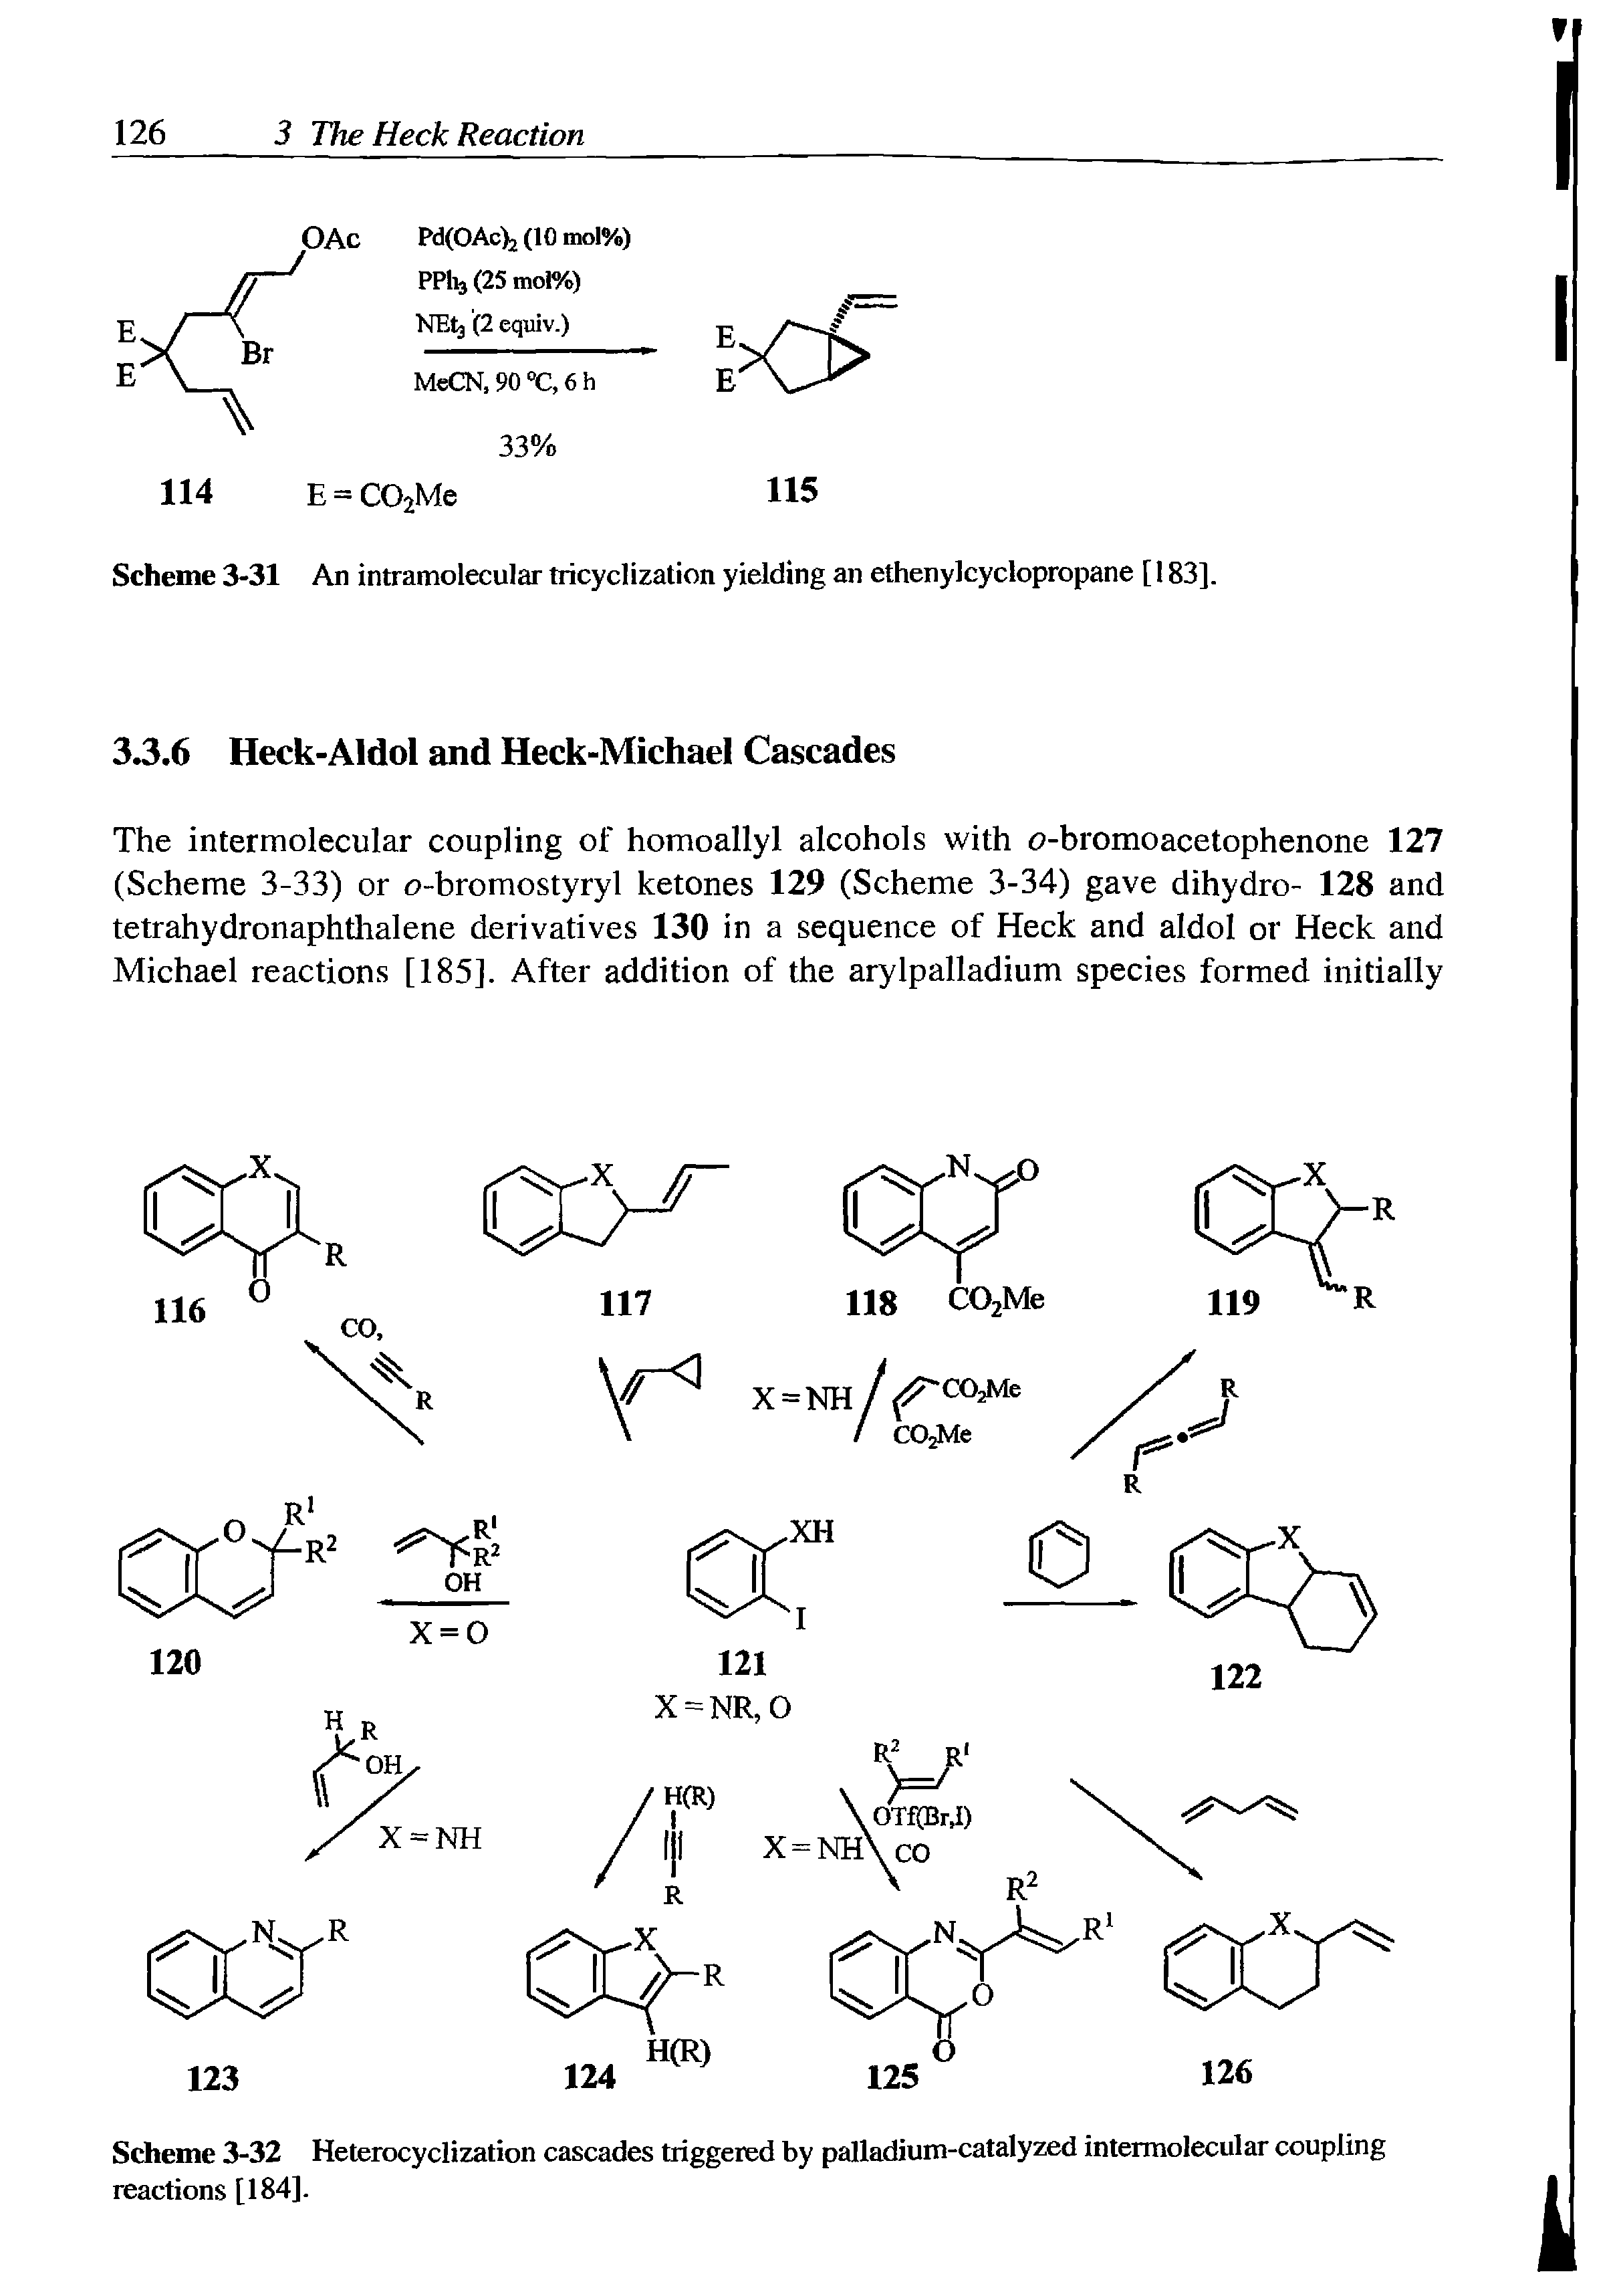 Scheme 3-32 Heterocyclization cascades triggered by palladium-catalyzed intermolecular coupling reactions [184].